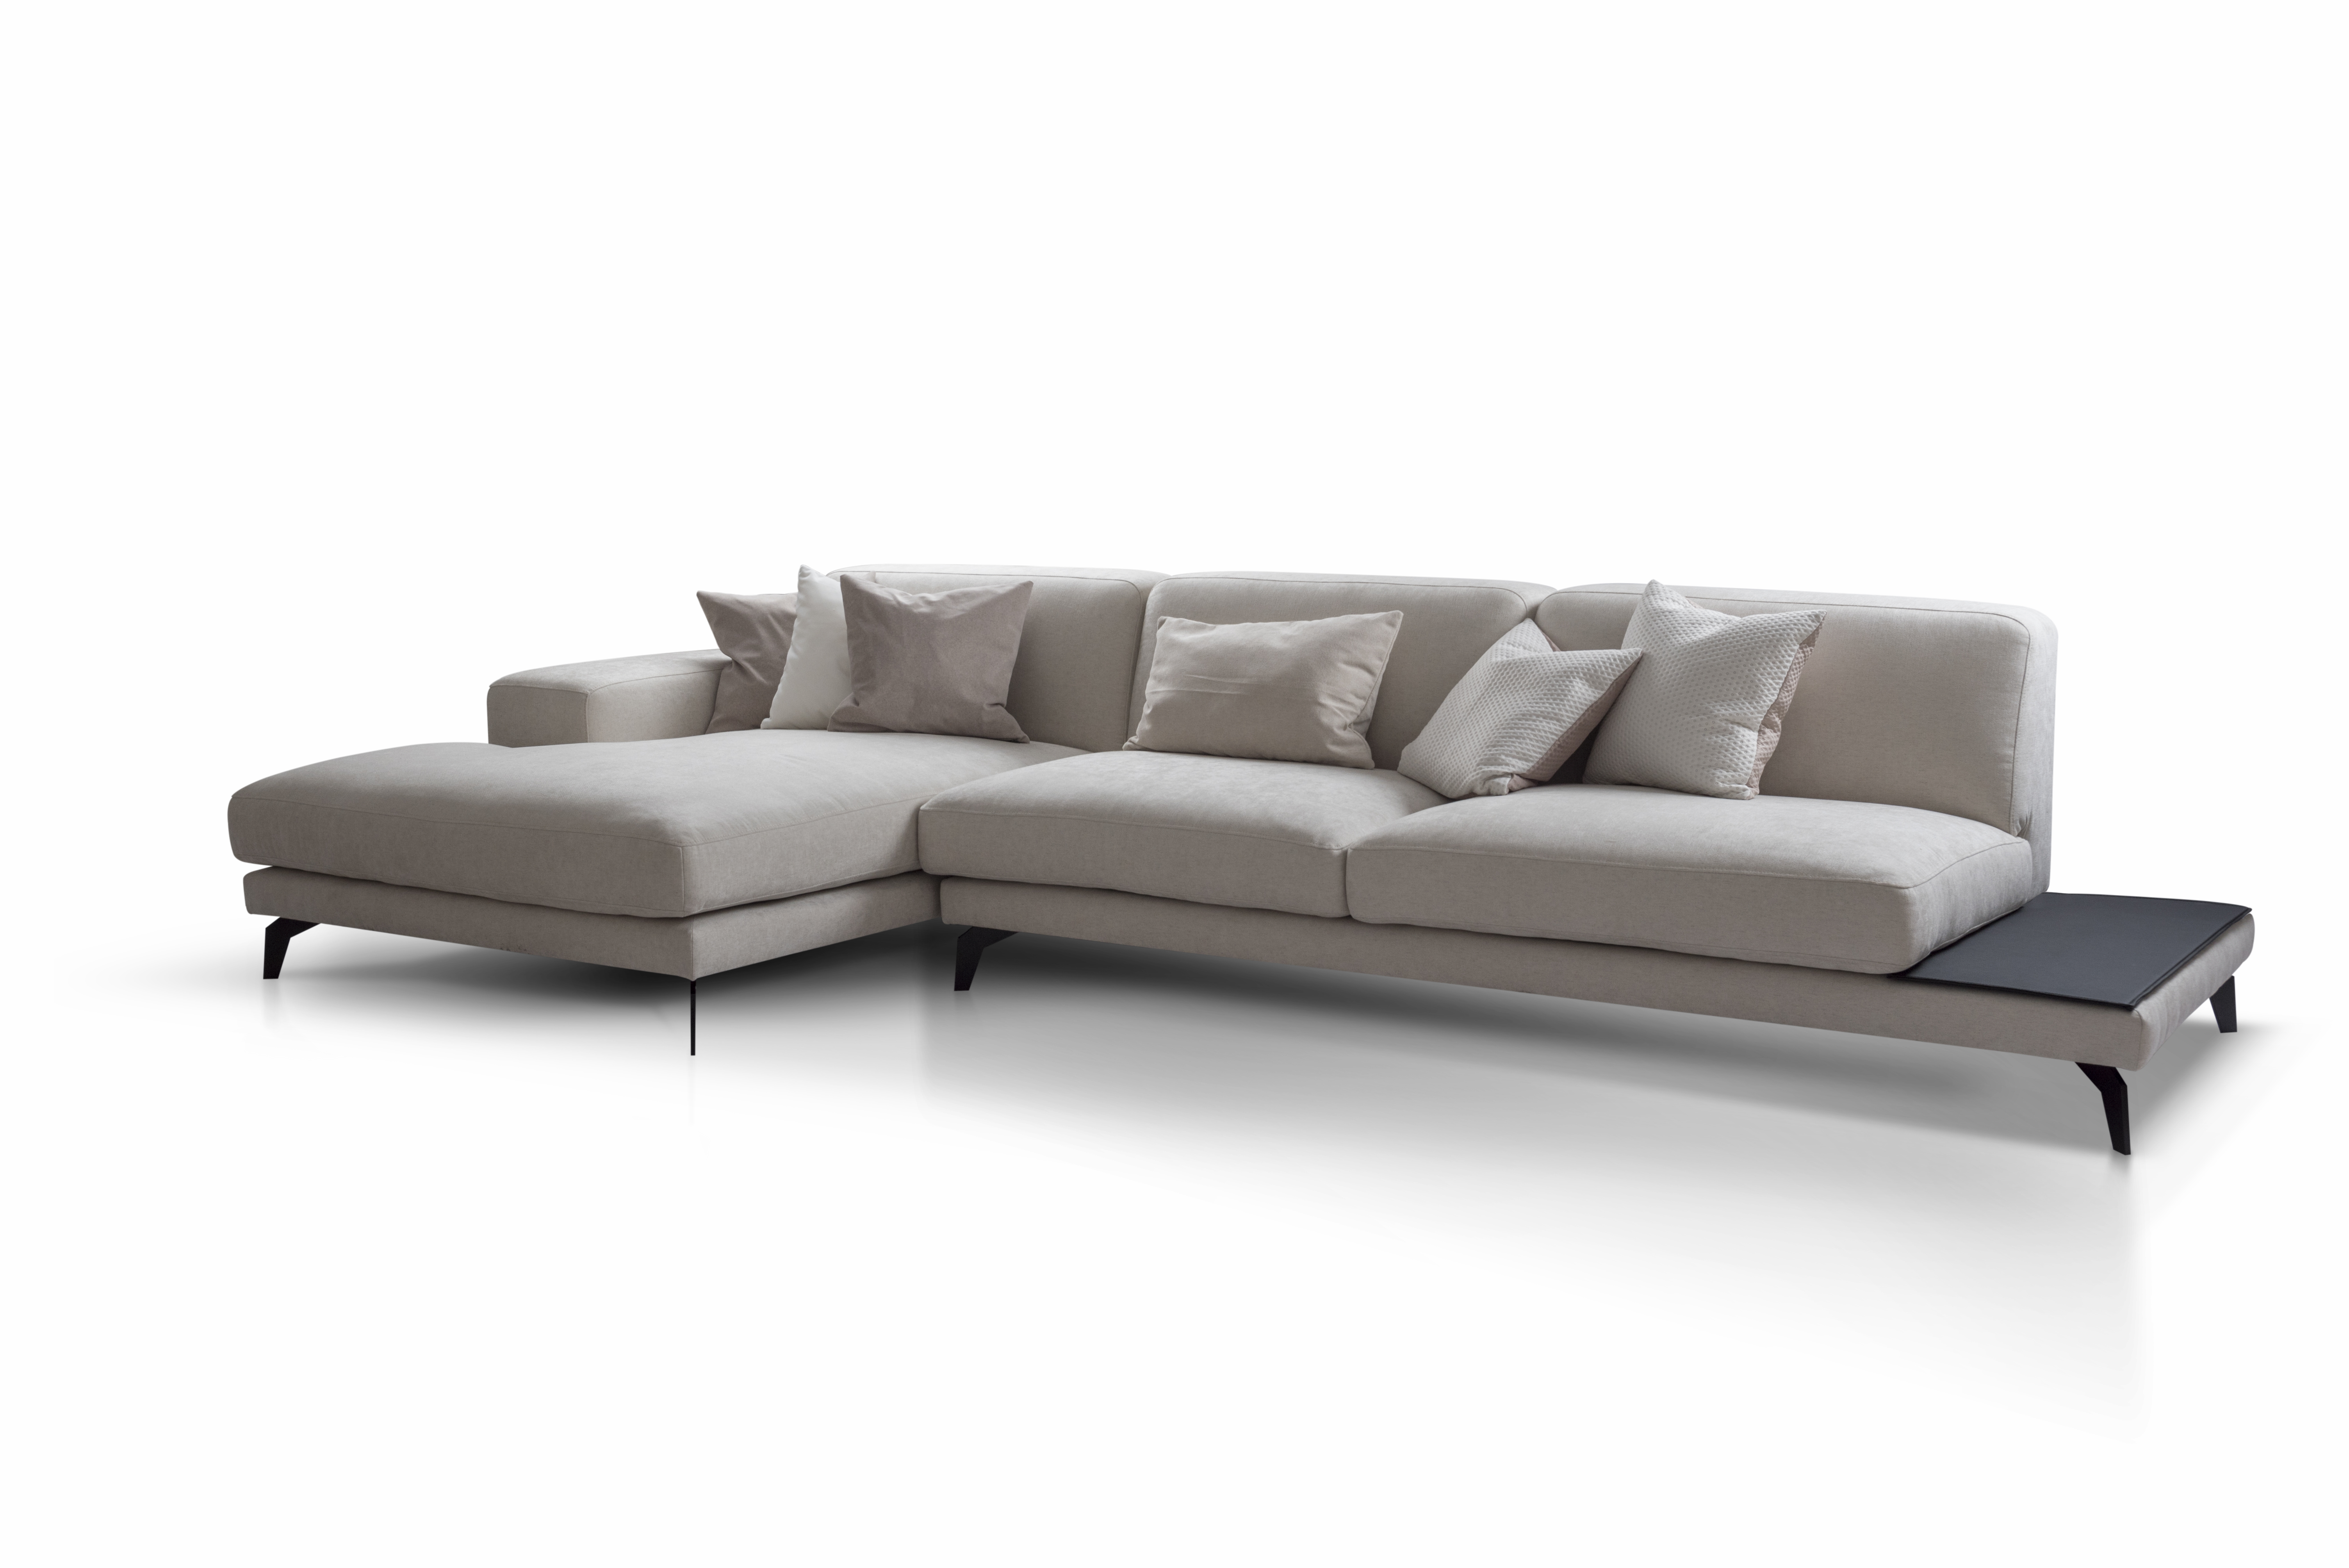 Kanapa modułowa - strefa komfortu z Inspirium 5 Inspirium sofa Enjoy